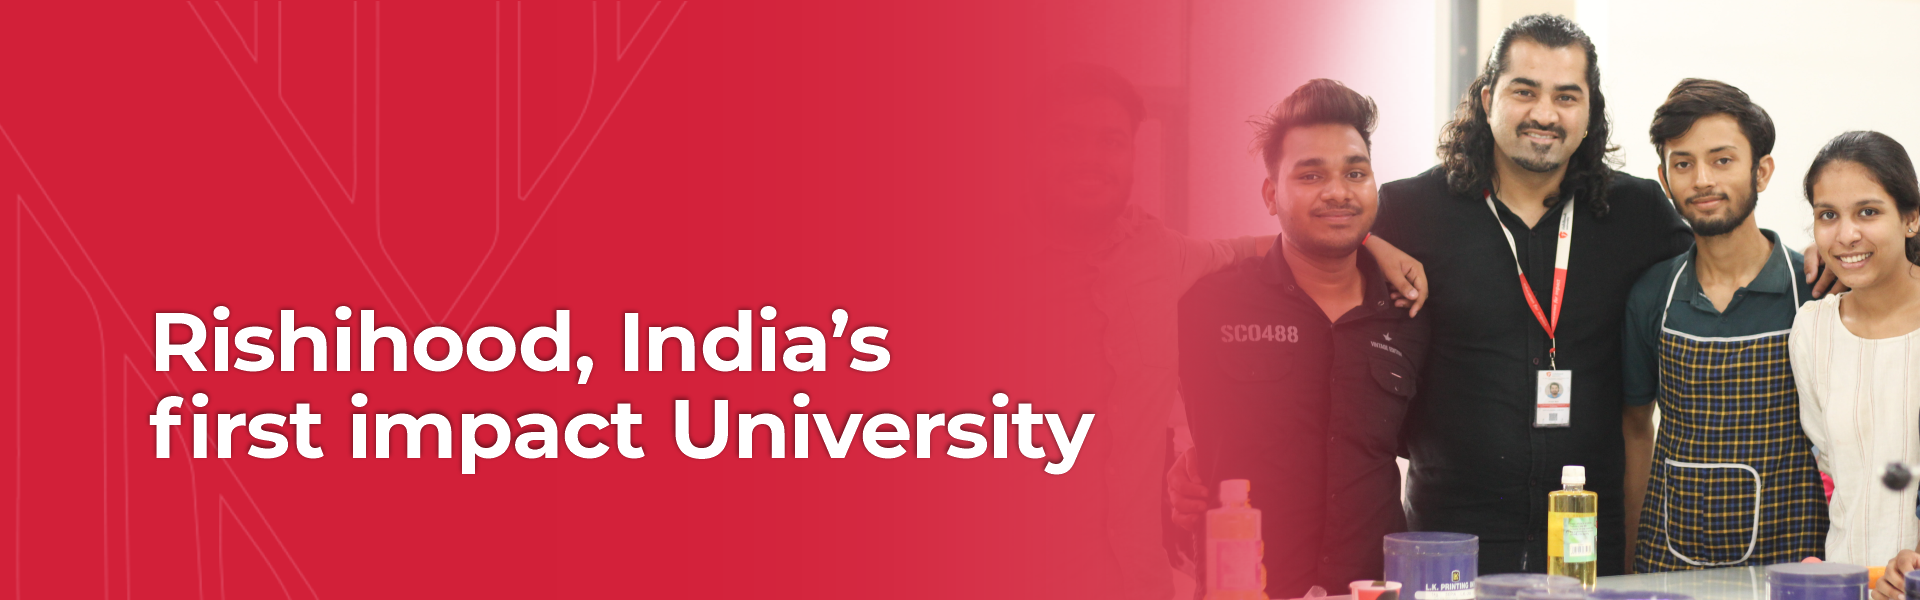 Rishihood India's first impact University